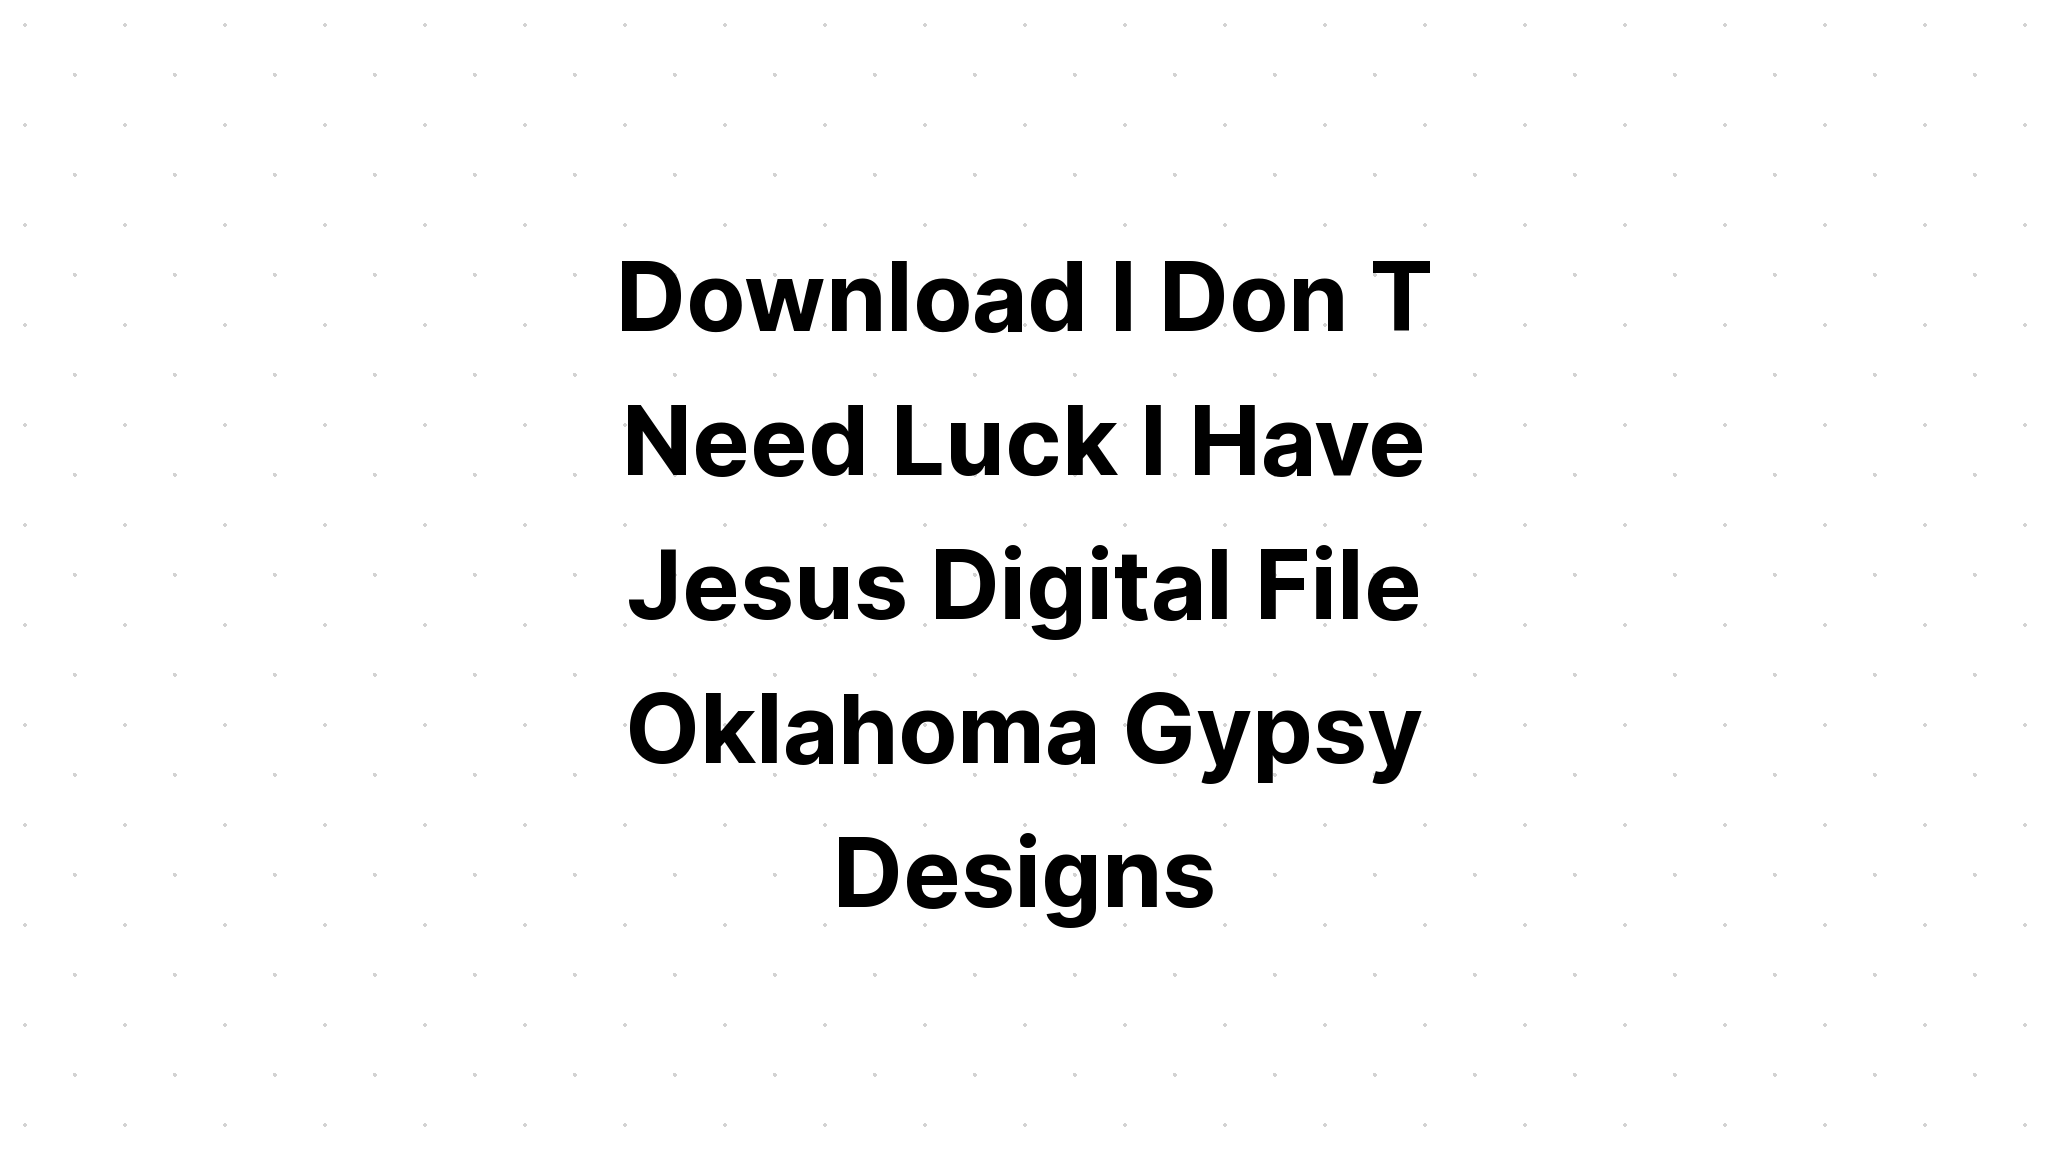 Download I Don't Need Luck I Have Jesus SVG File